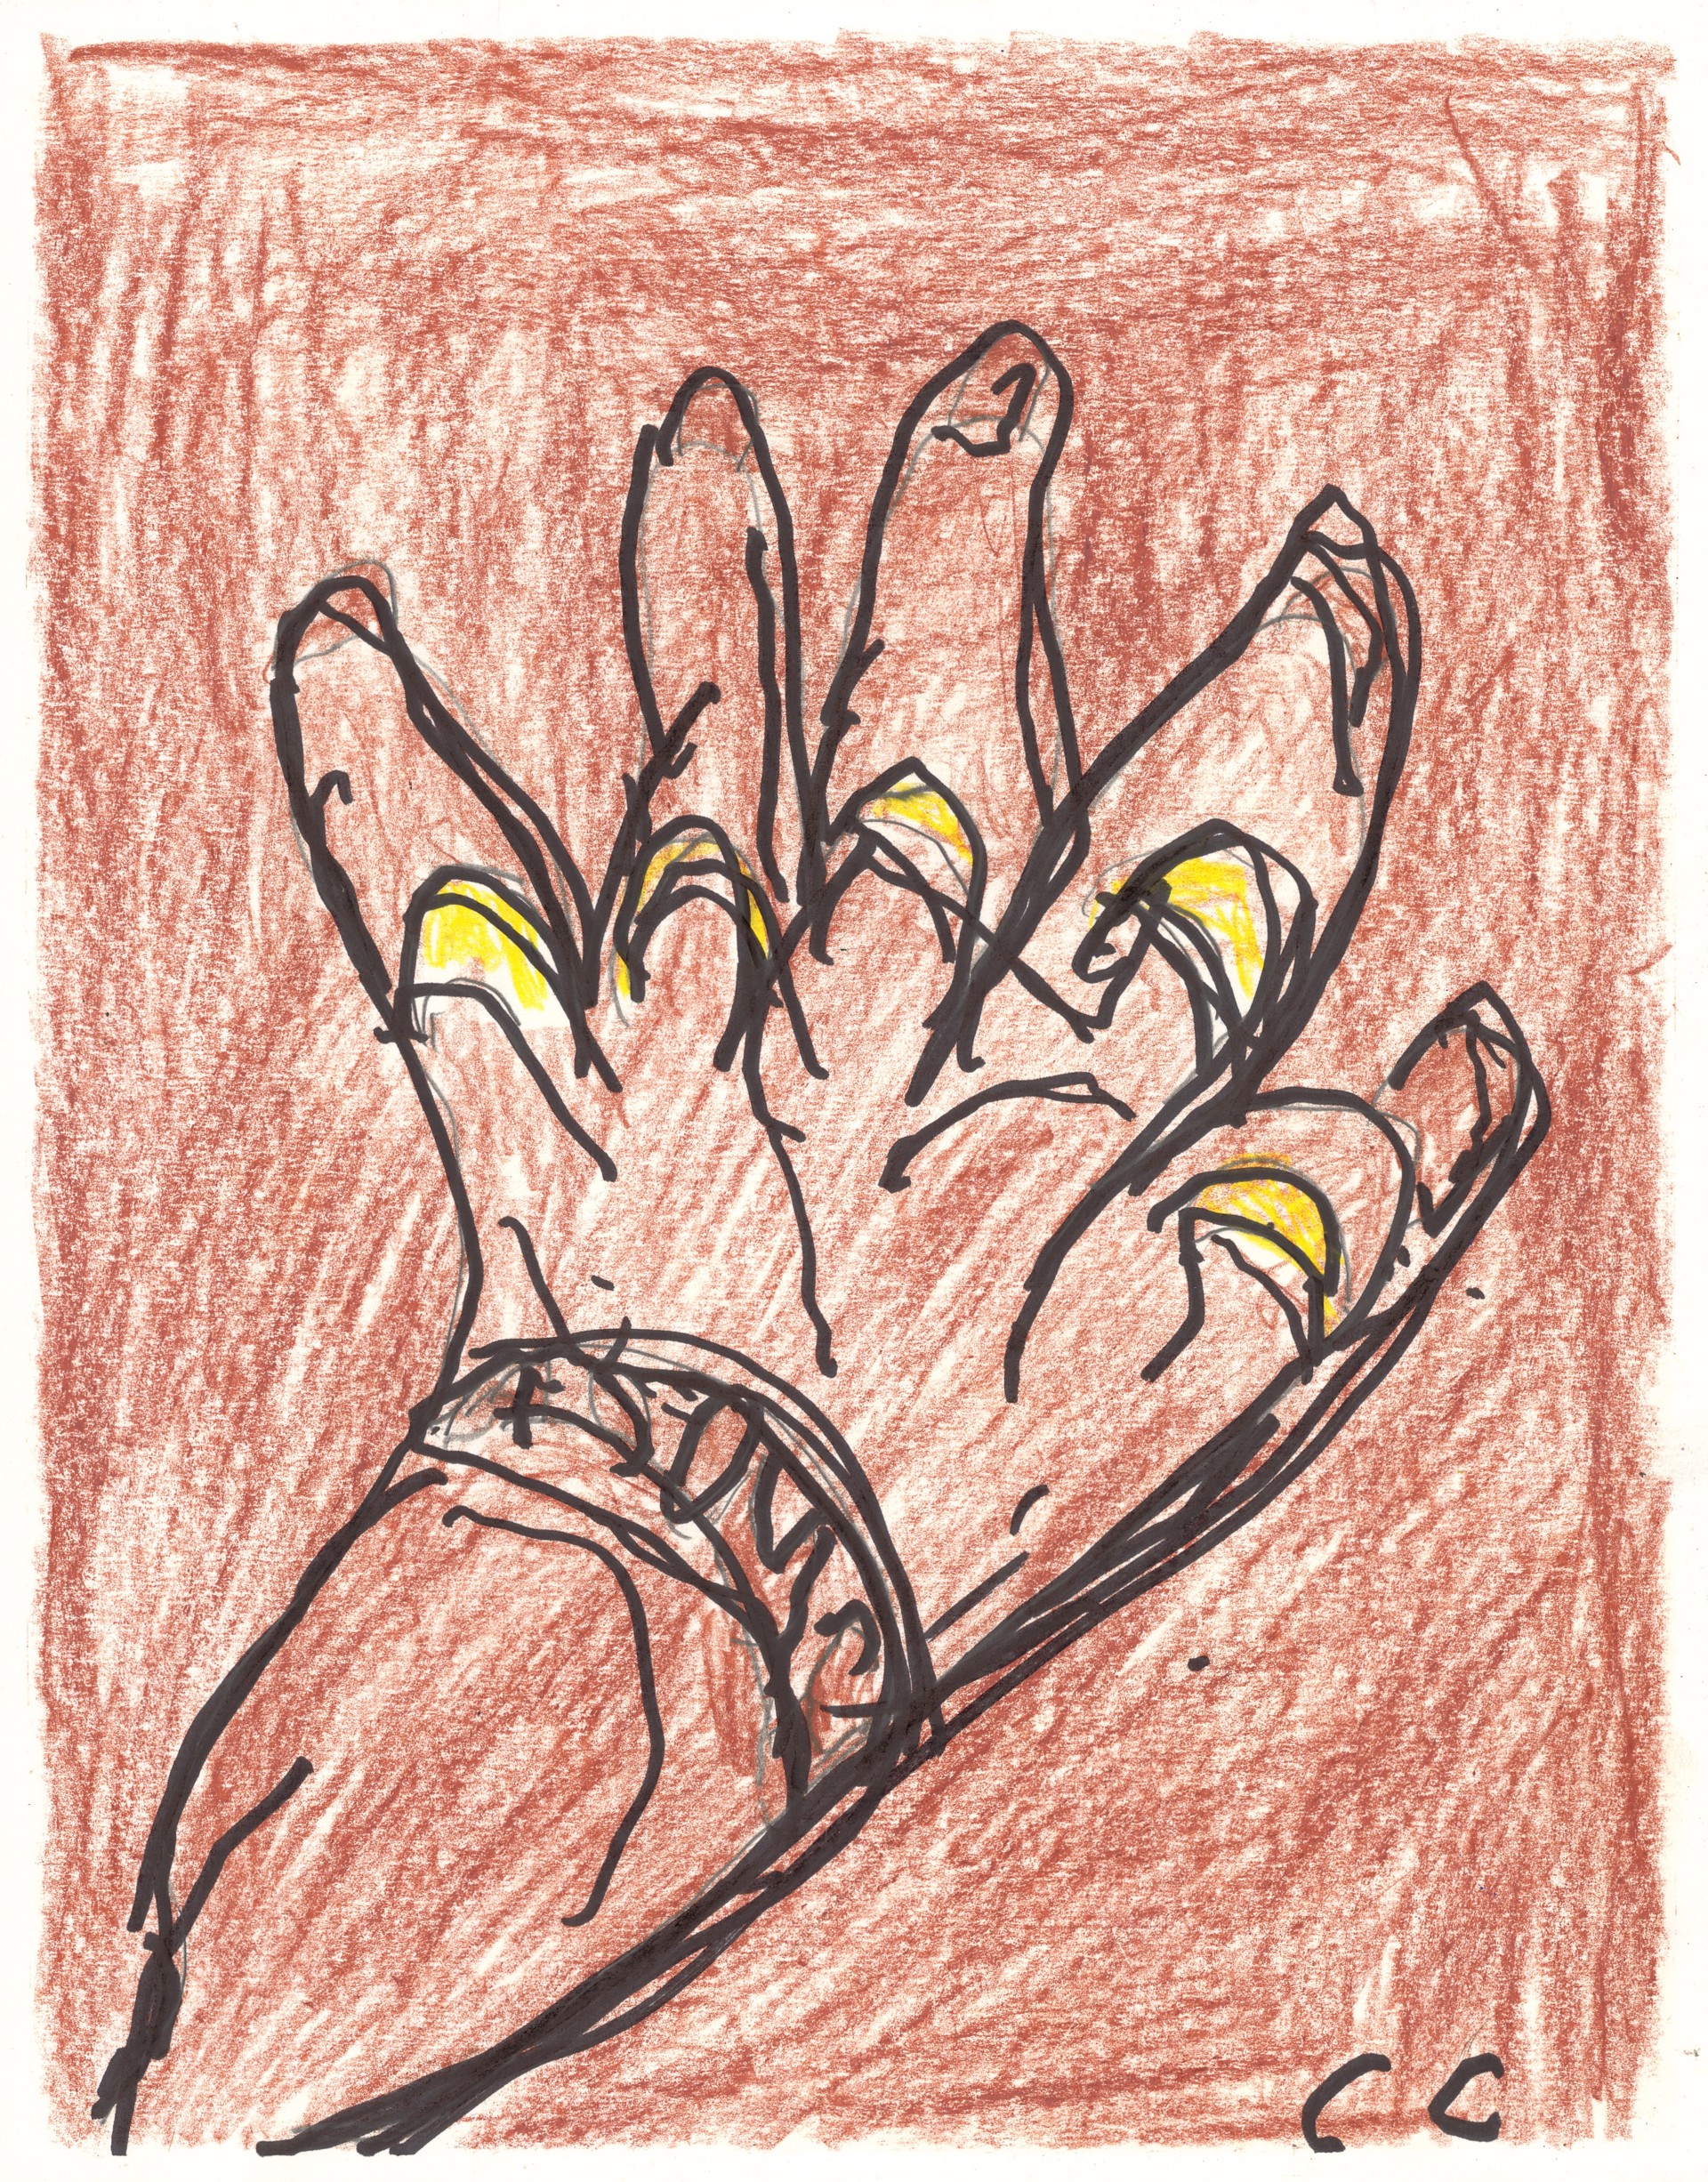 My Hand by Calvin "Sonny" Clarke